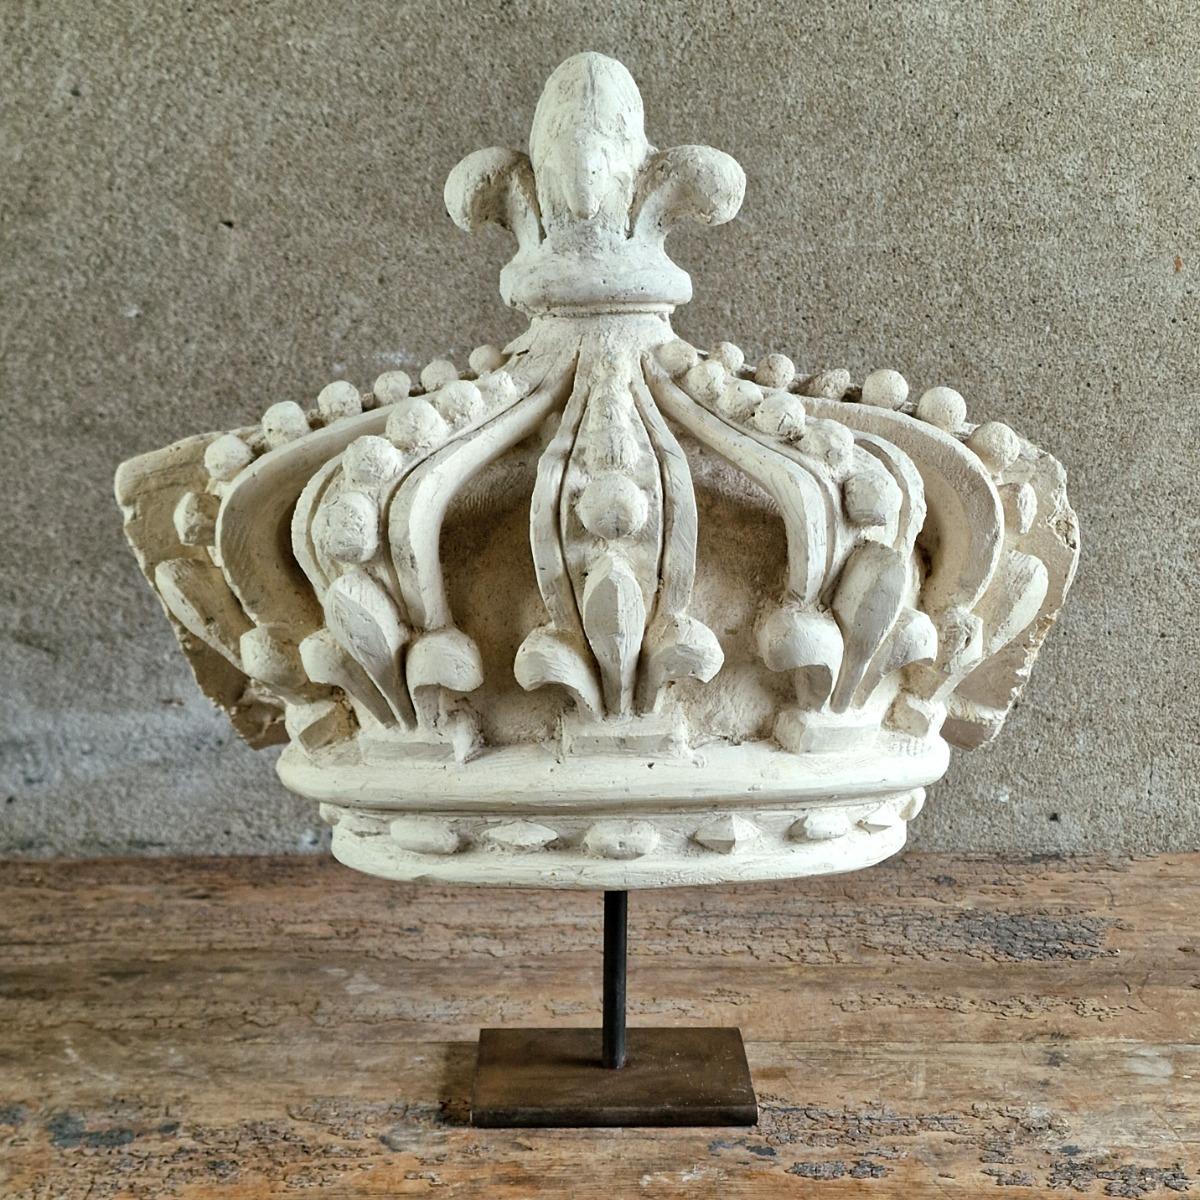 Mounted plaster crown